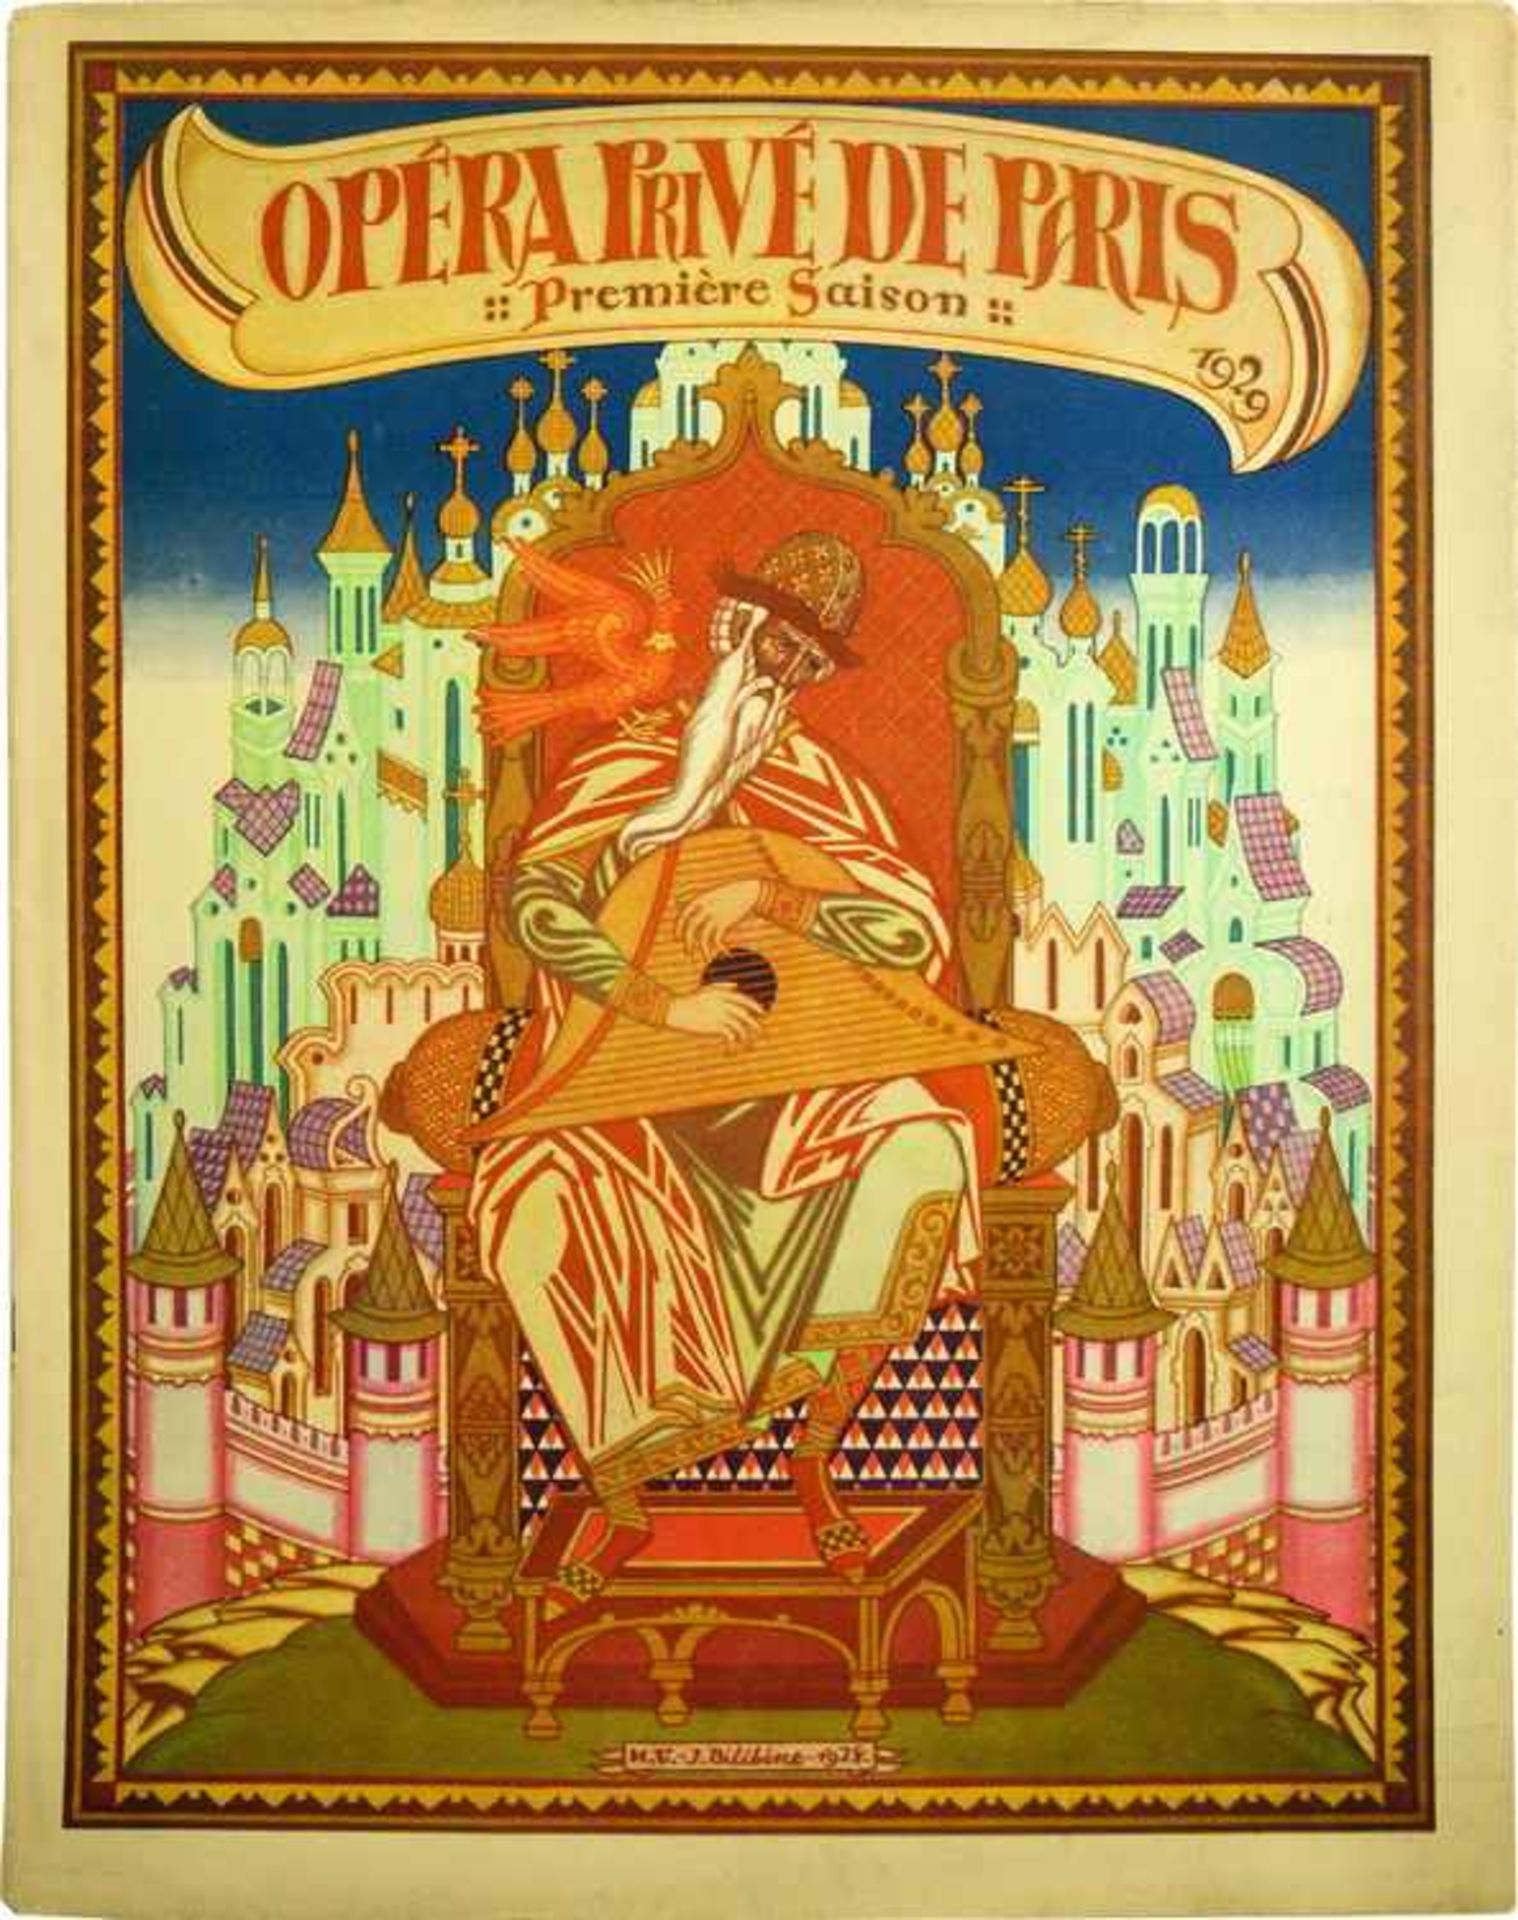 [OPERA RUSSE, BILIBIN, KOROWIN, REPIN, KUZNETSOW] Opéra Privé de Paris, Première Saison, 1929: “Le